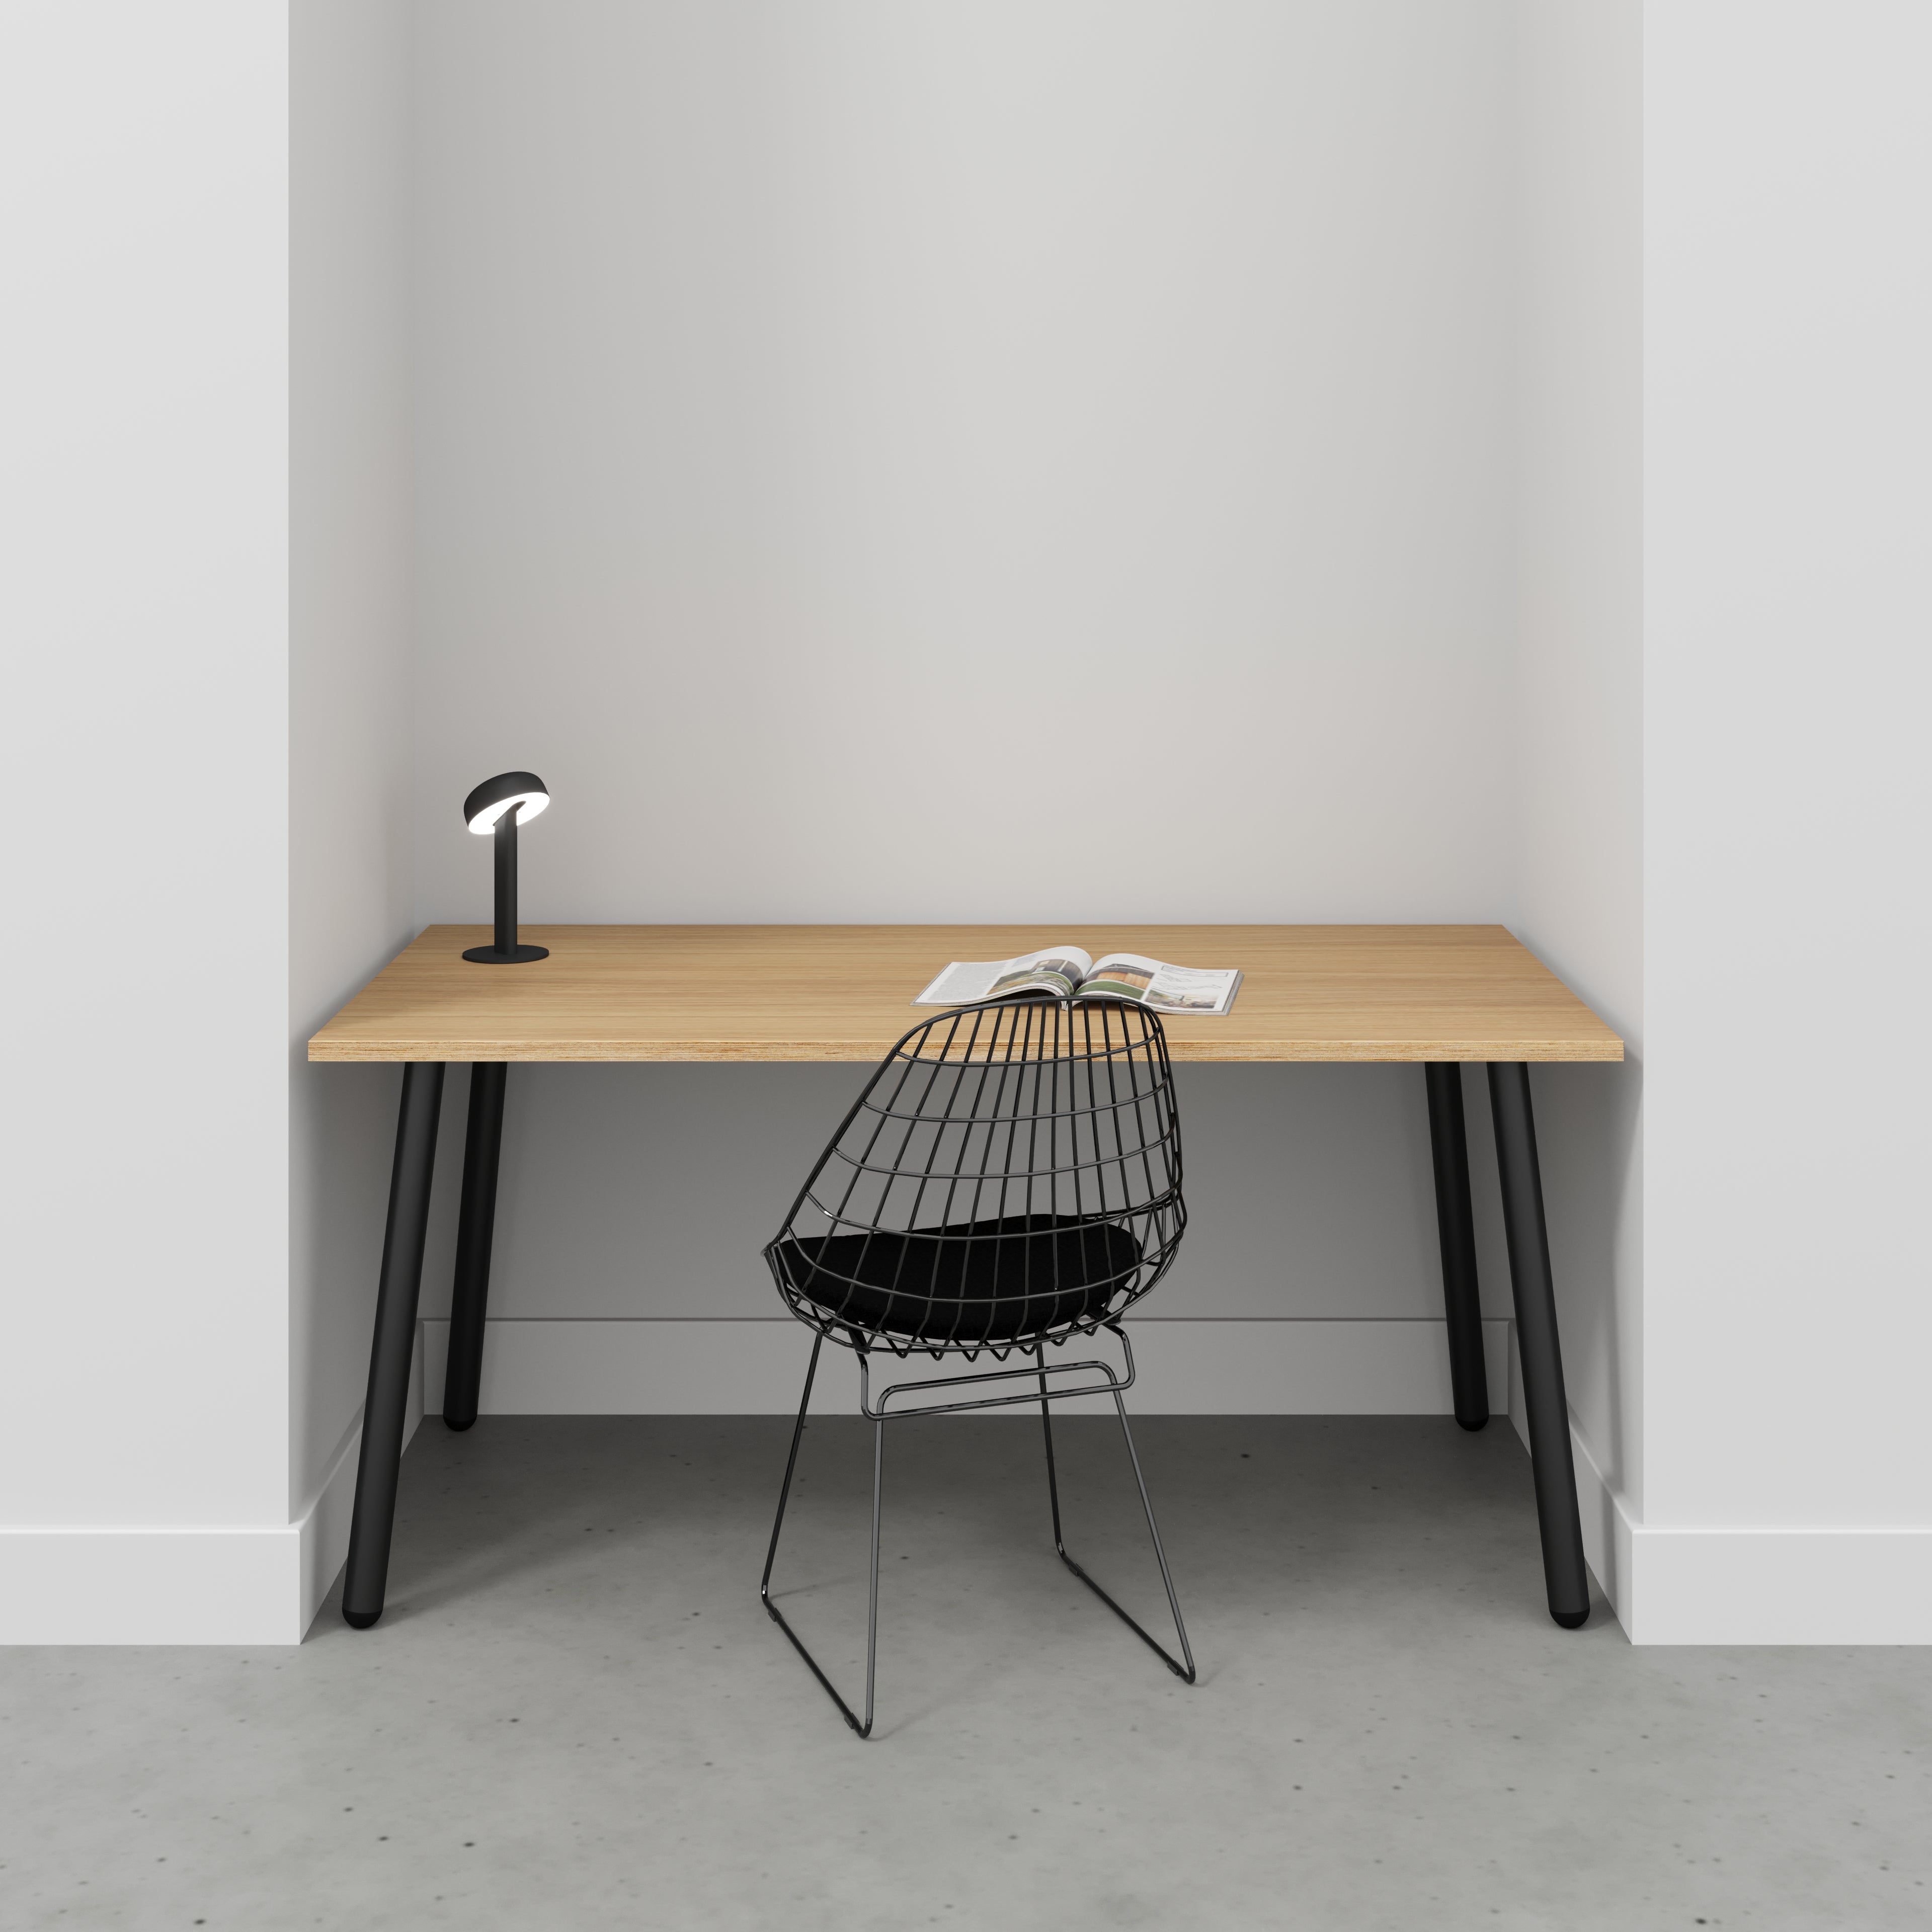 Desk with Black Round Single Pin Legs - Plywood Oak - 1600(w) x 800(d) x 735(h)